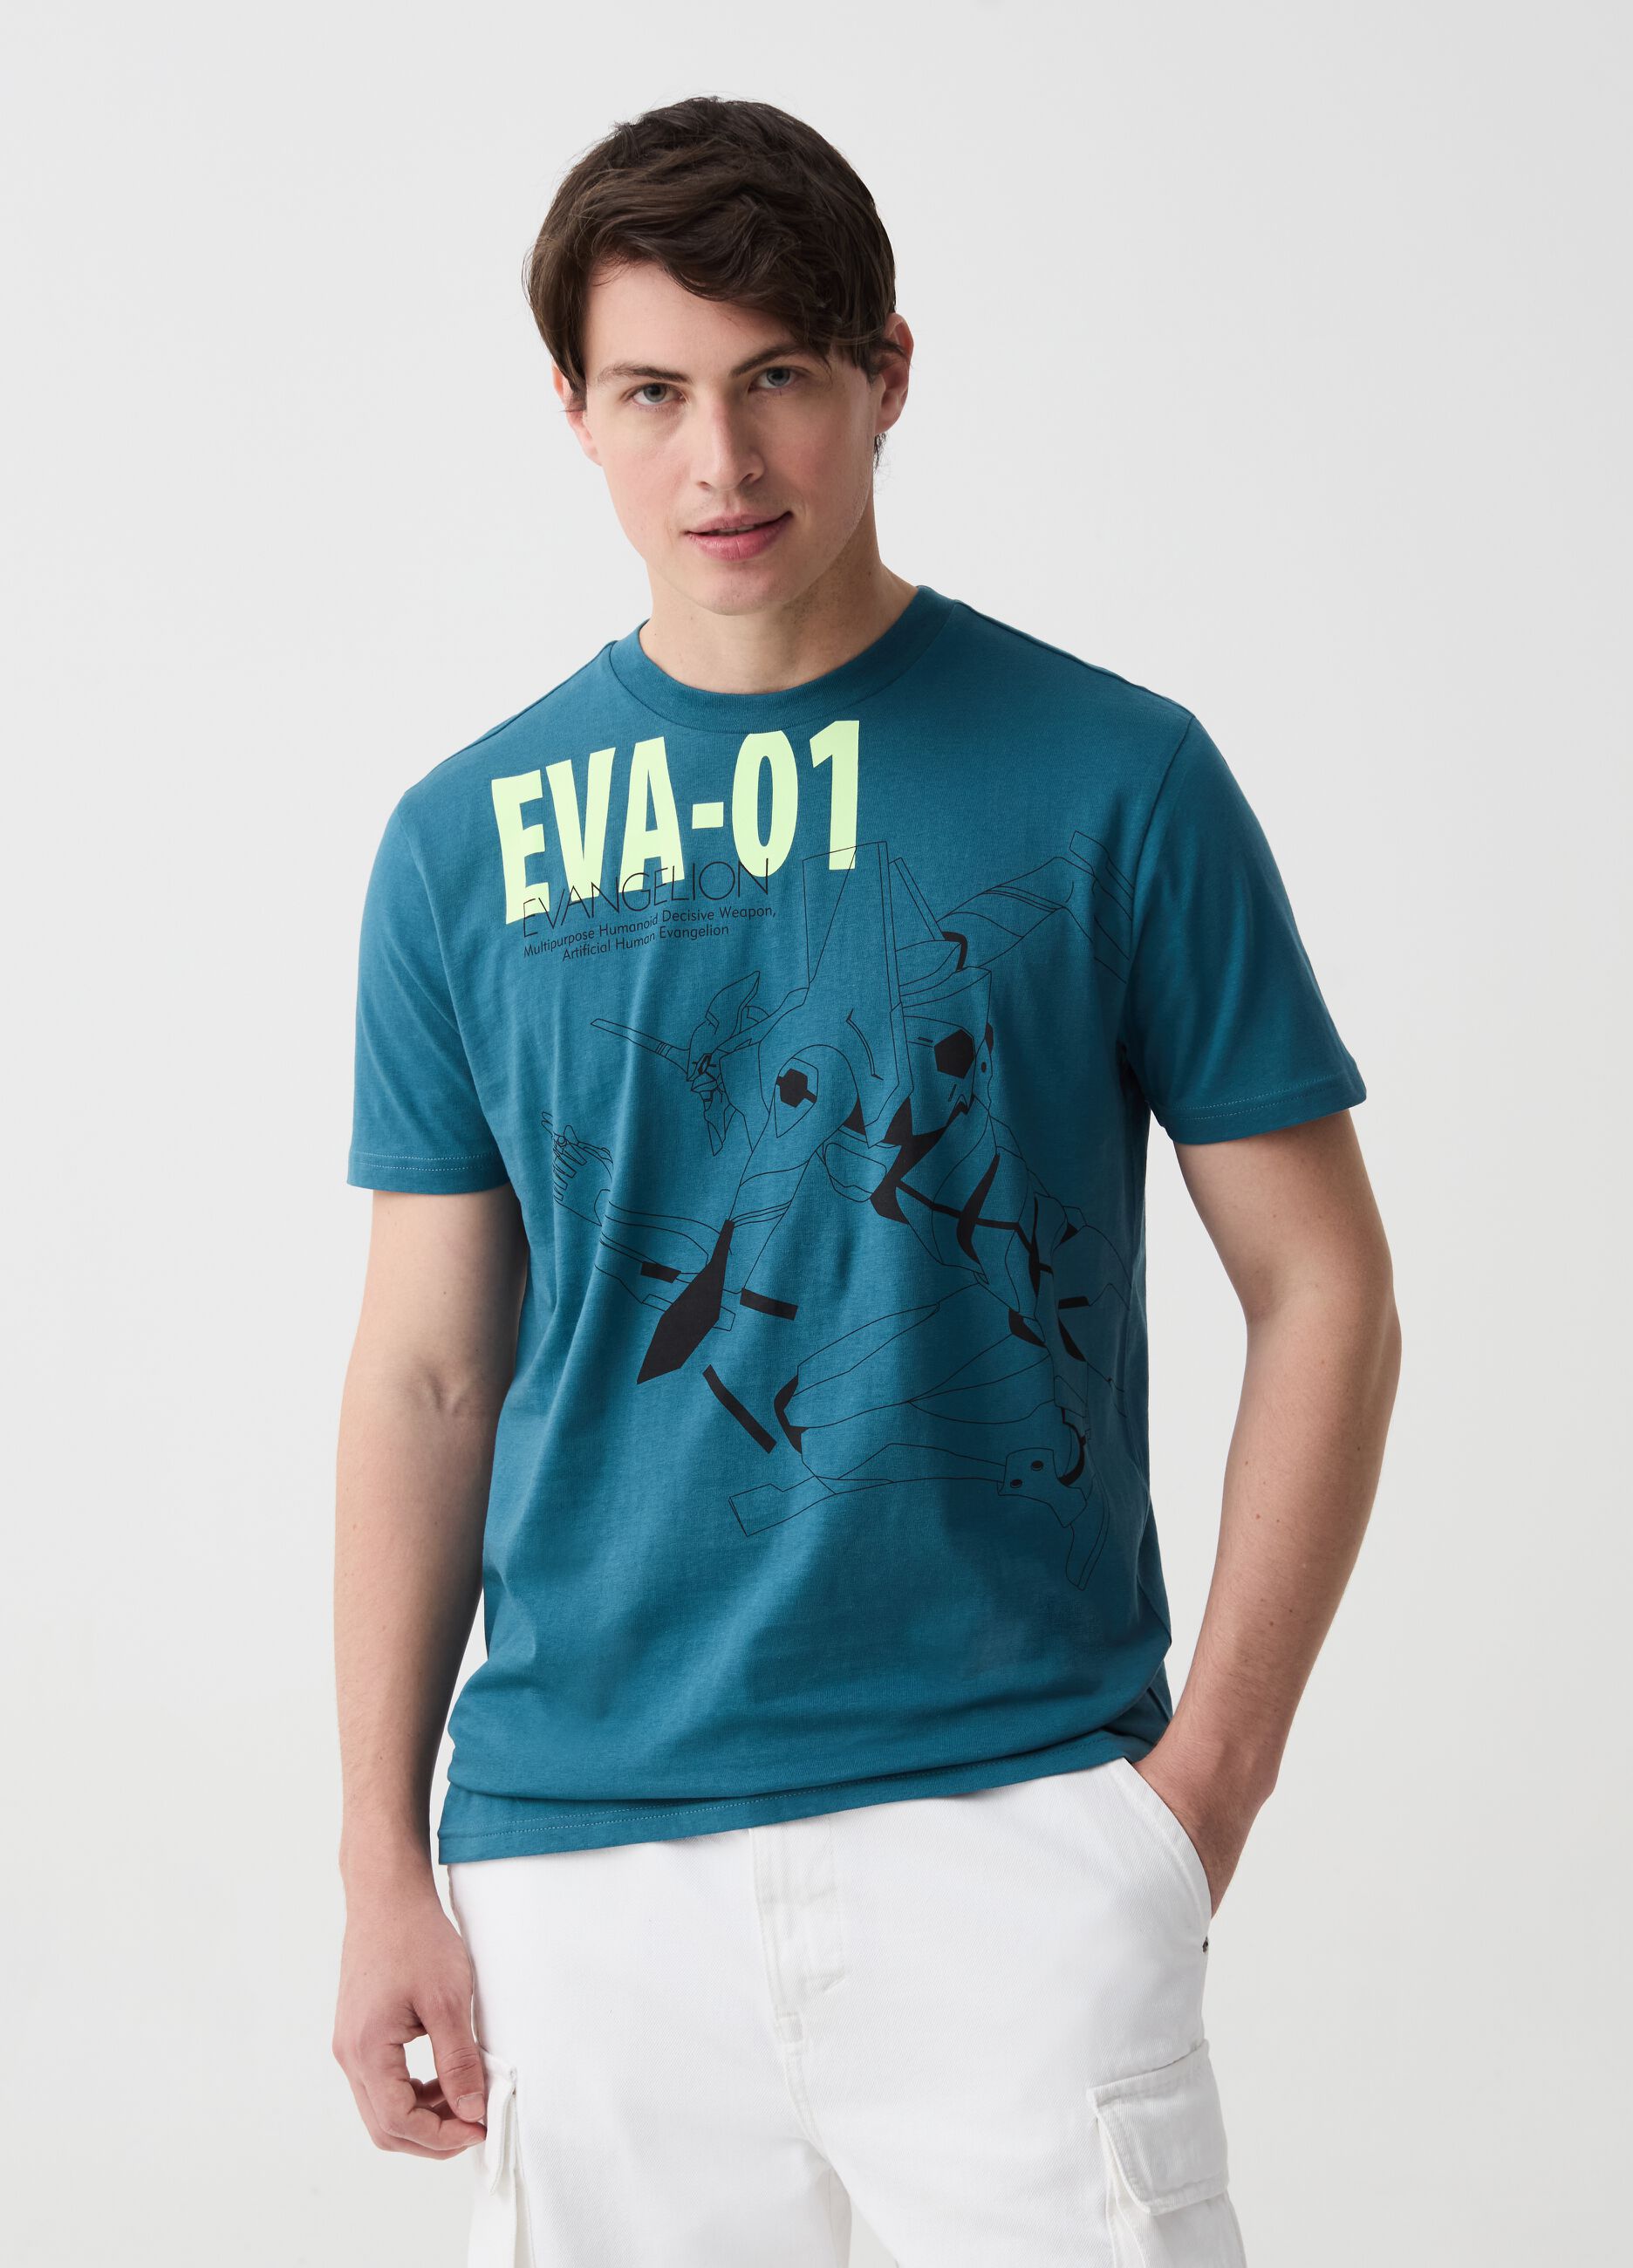 T-shirt with Evangelion print